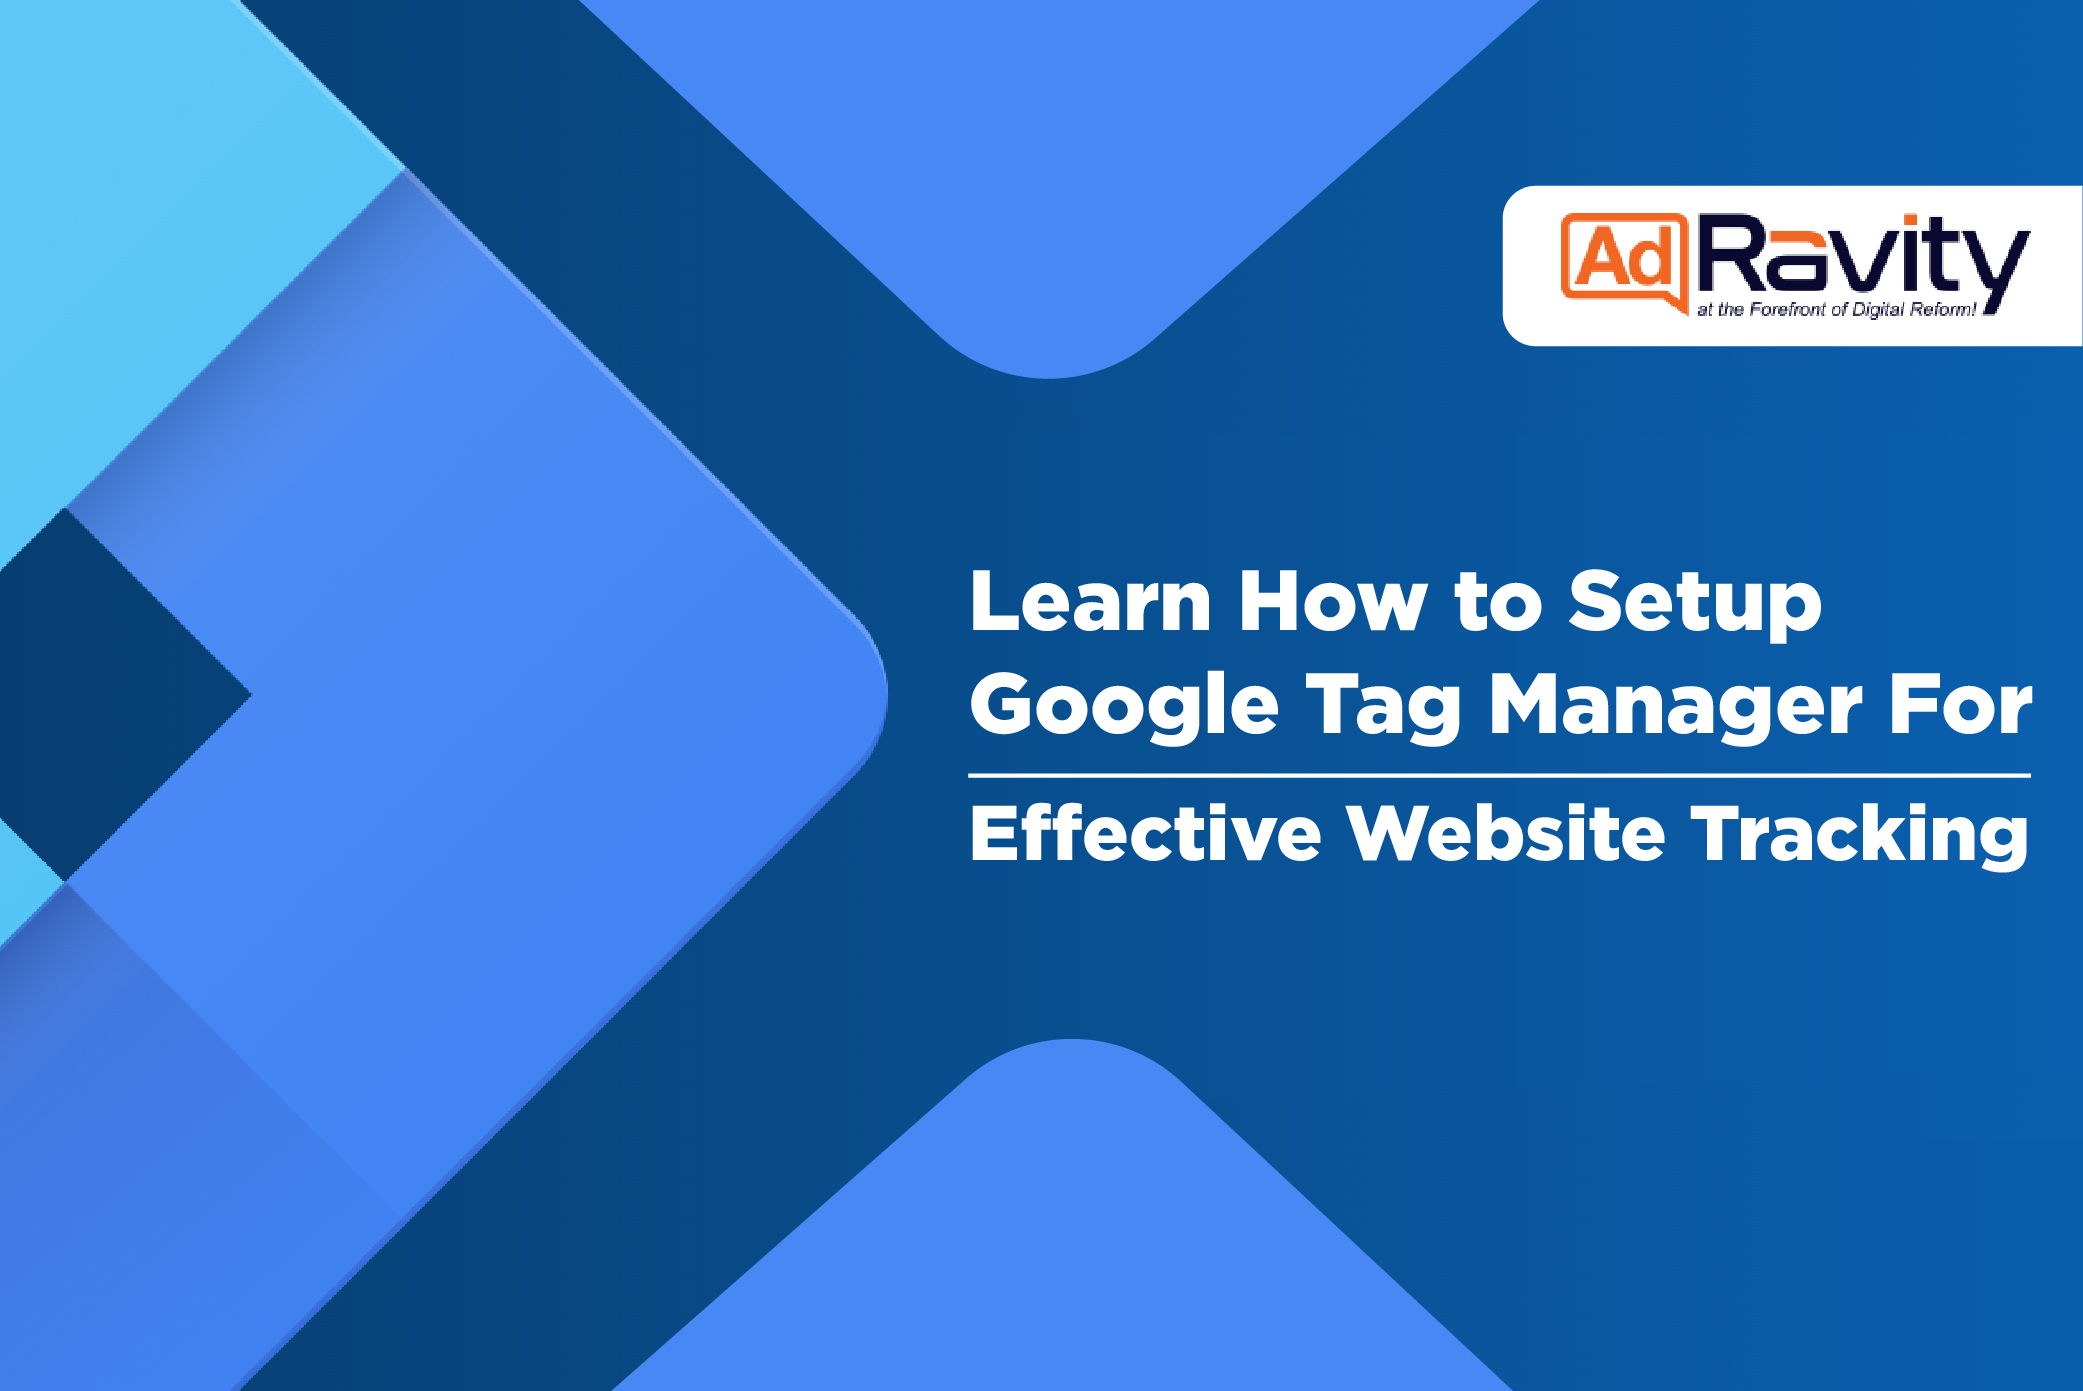 How to Setup Google Tag Manager